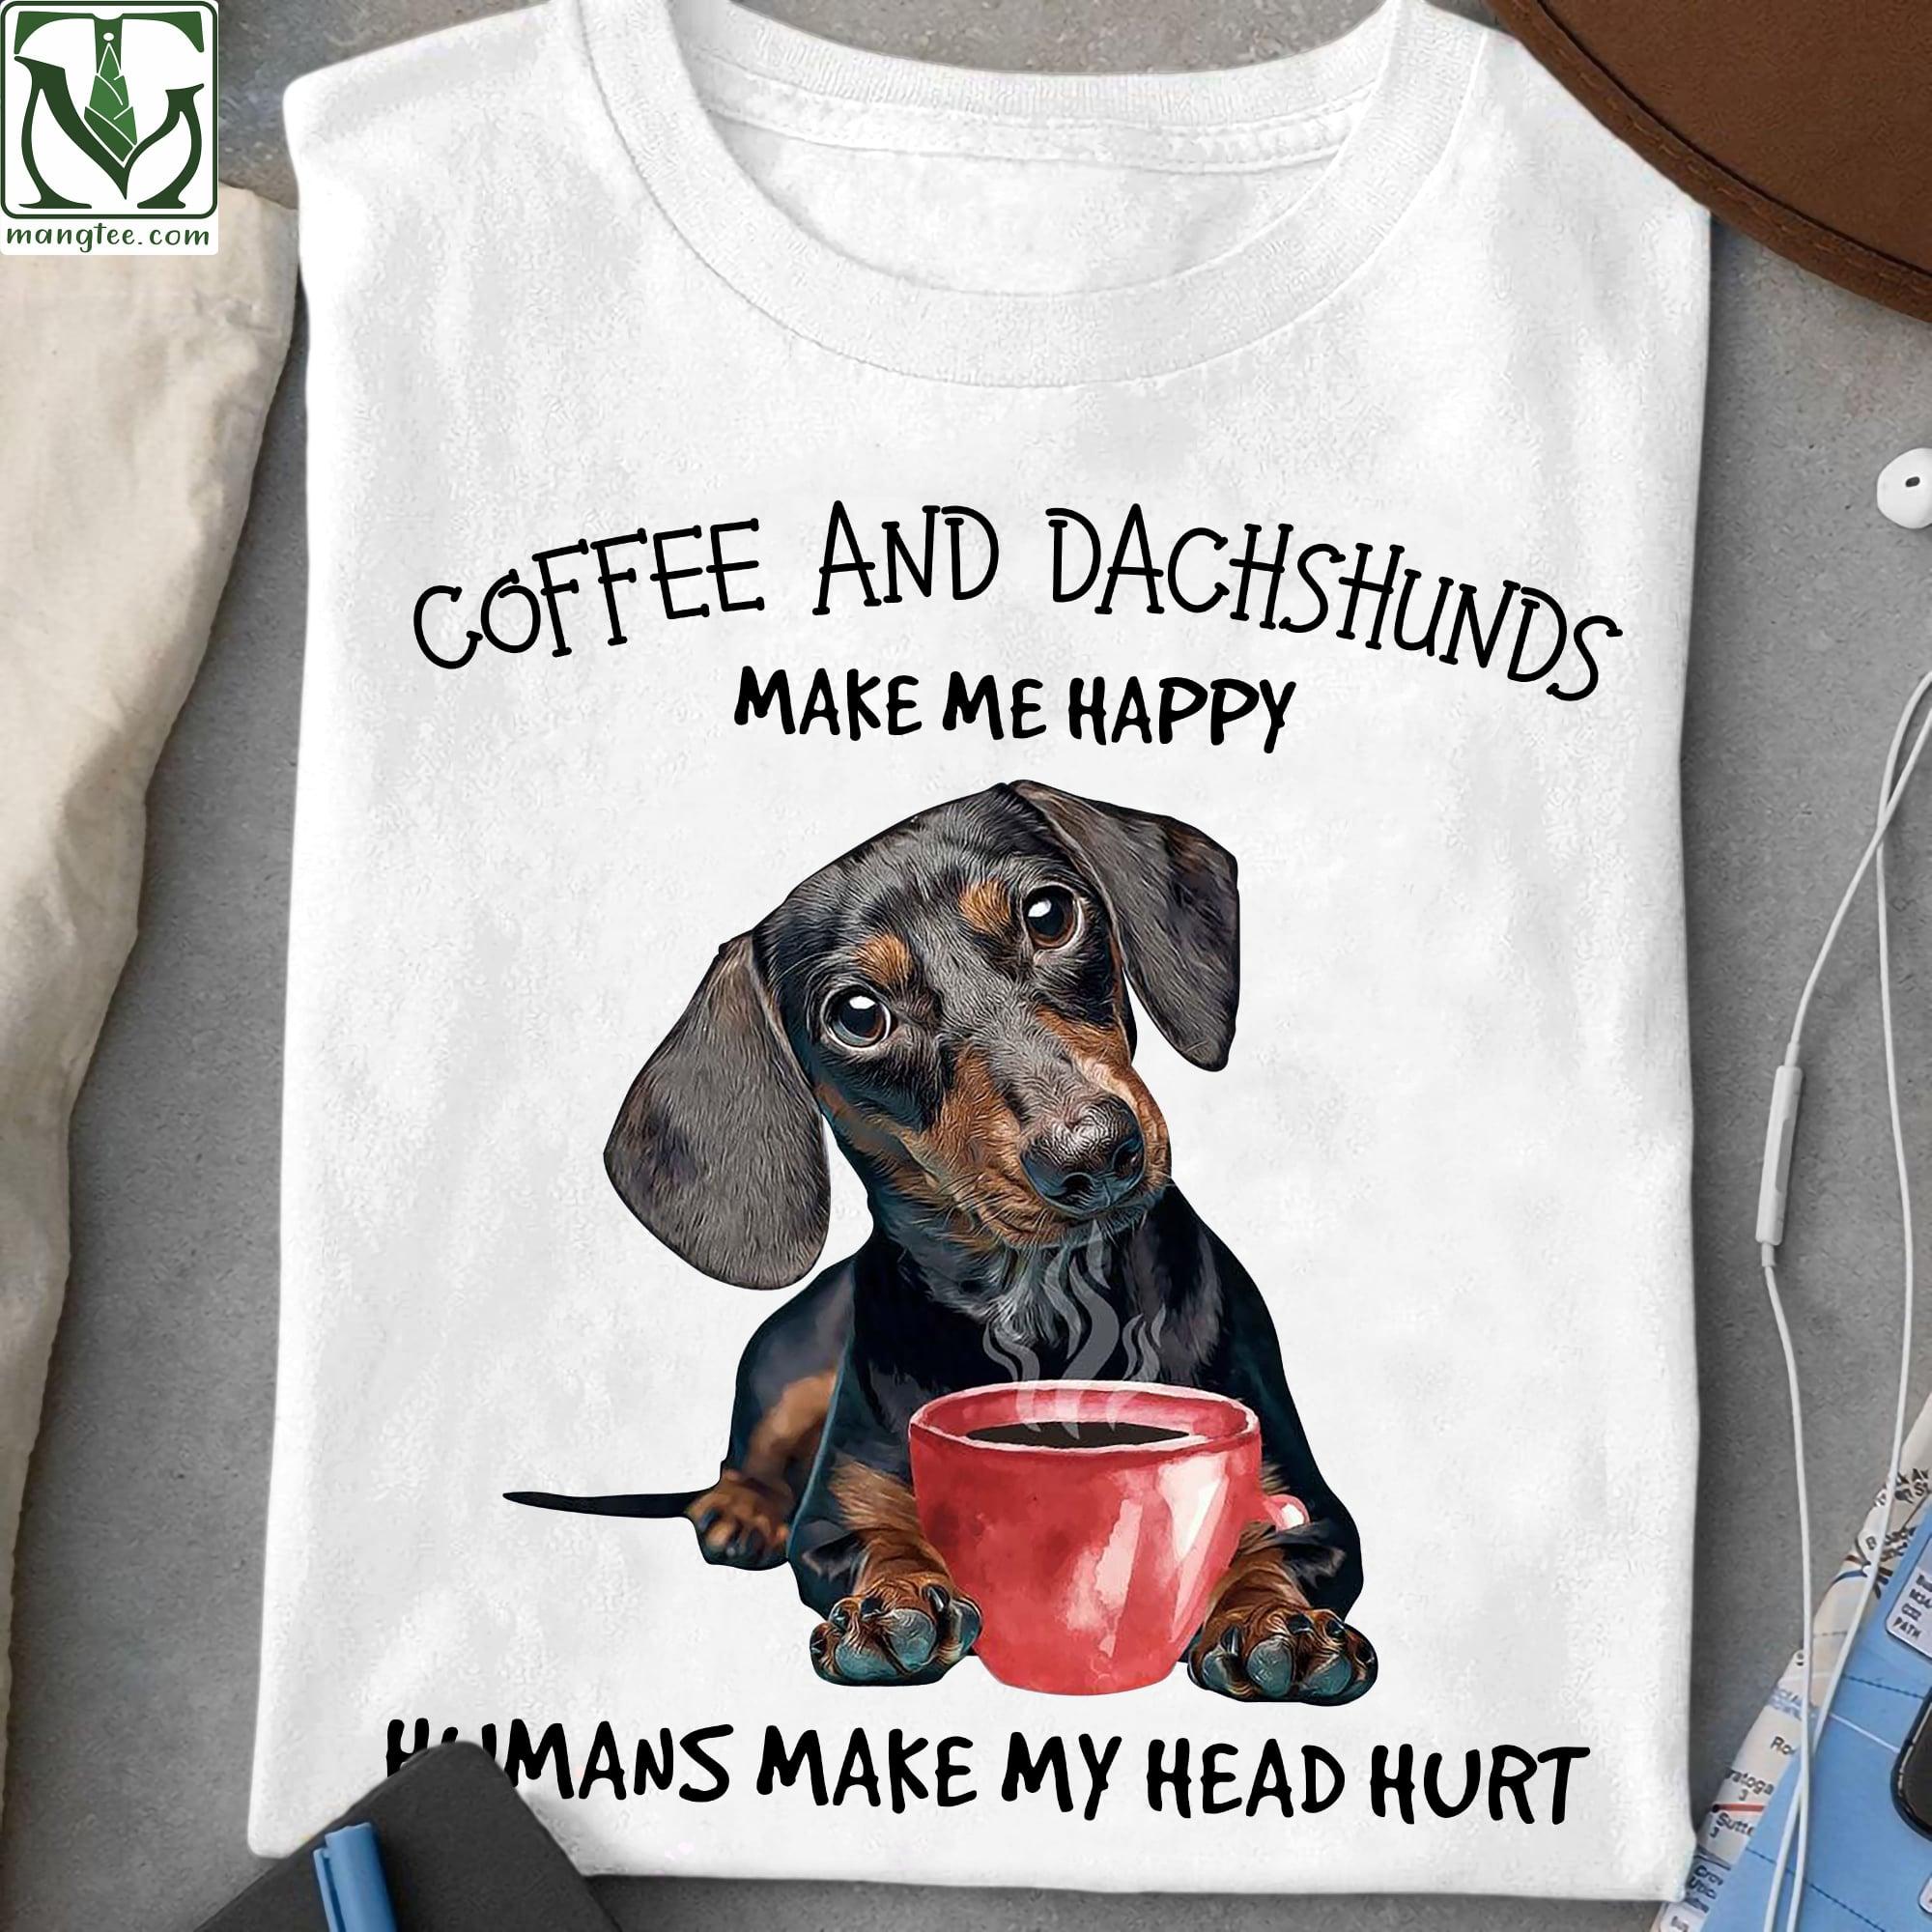 Coffee and Dachshund make me happy, humans make my head hurt - Gorgeous Dachshund dog